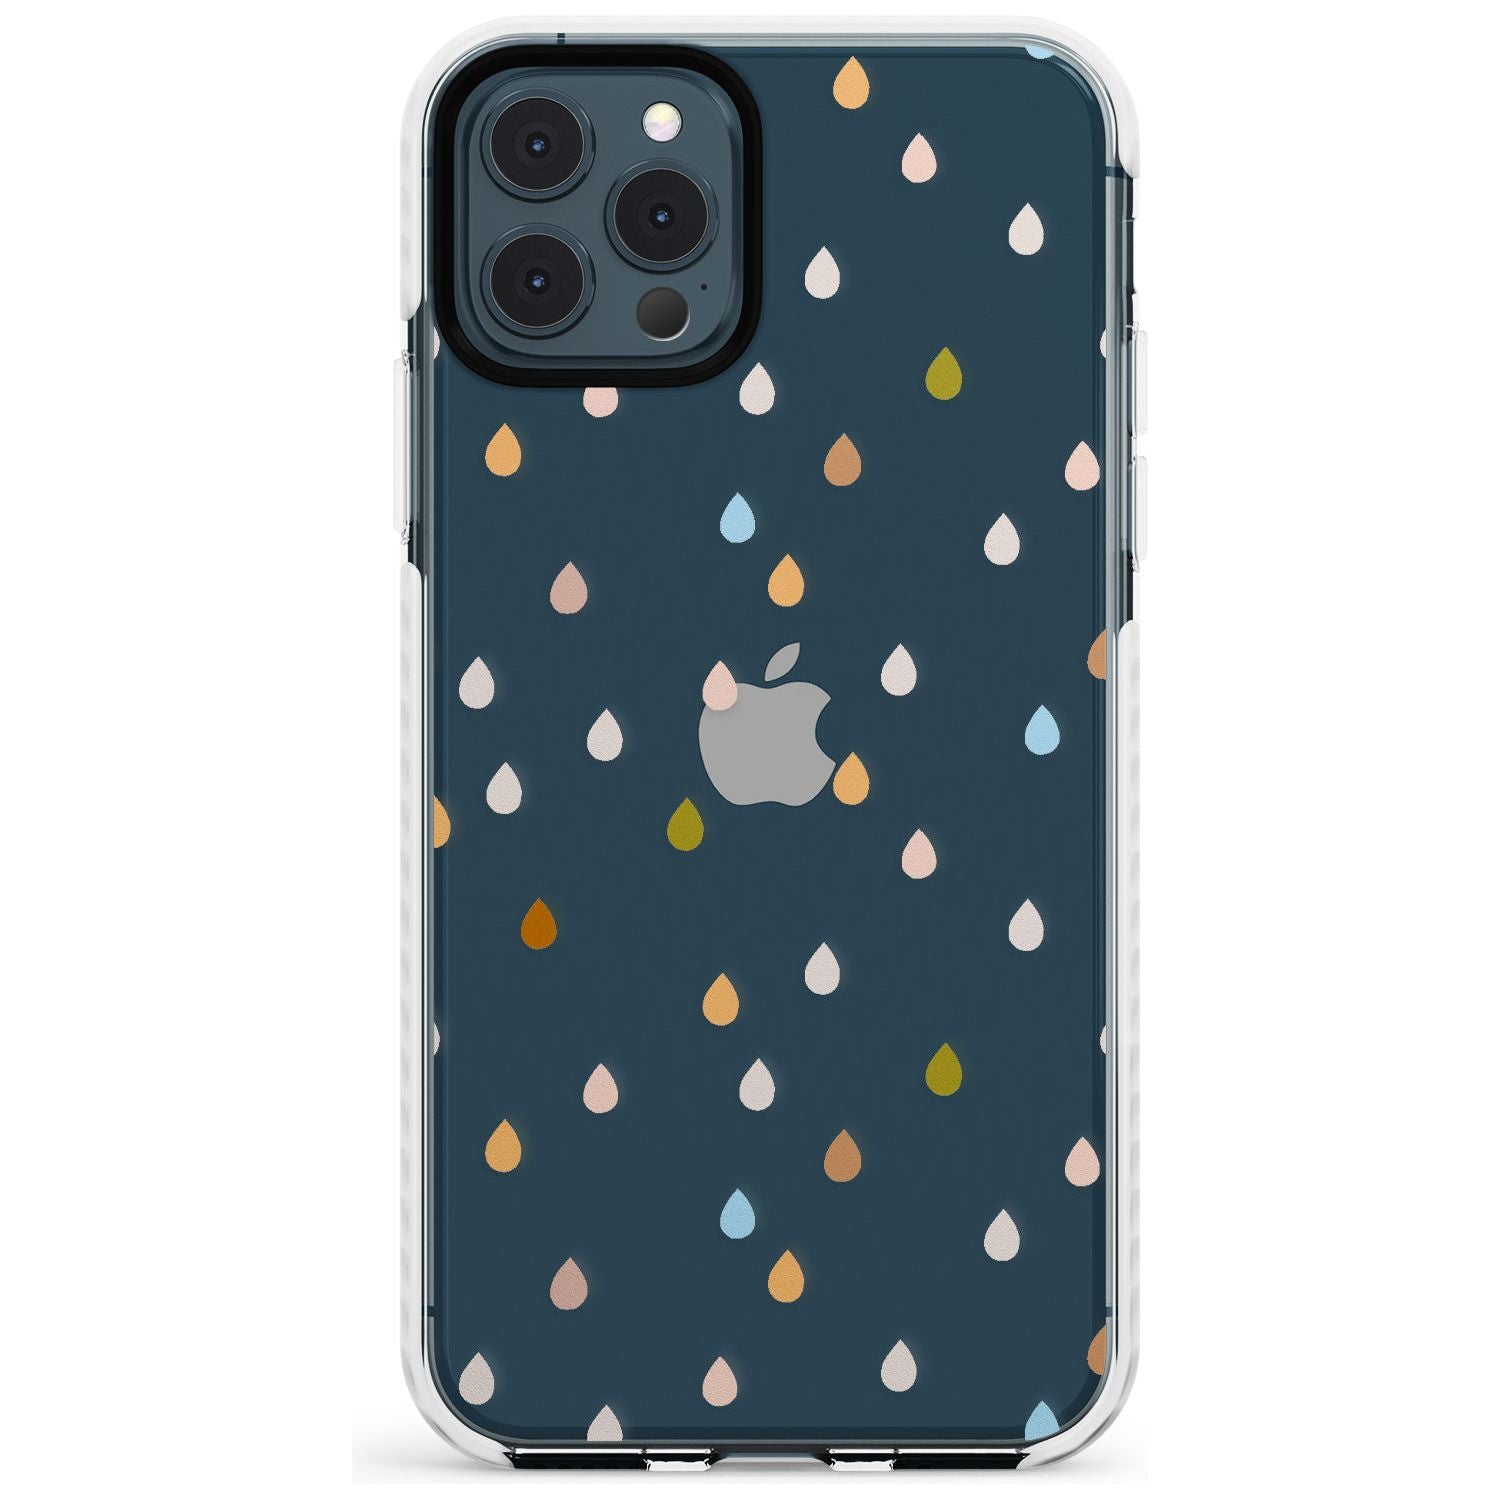 Raindrops Slim TPU Phone Case for iPhone 11 Pro Max